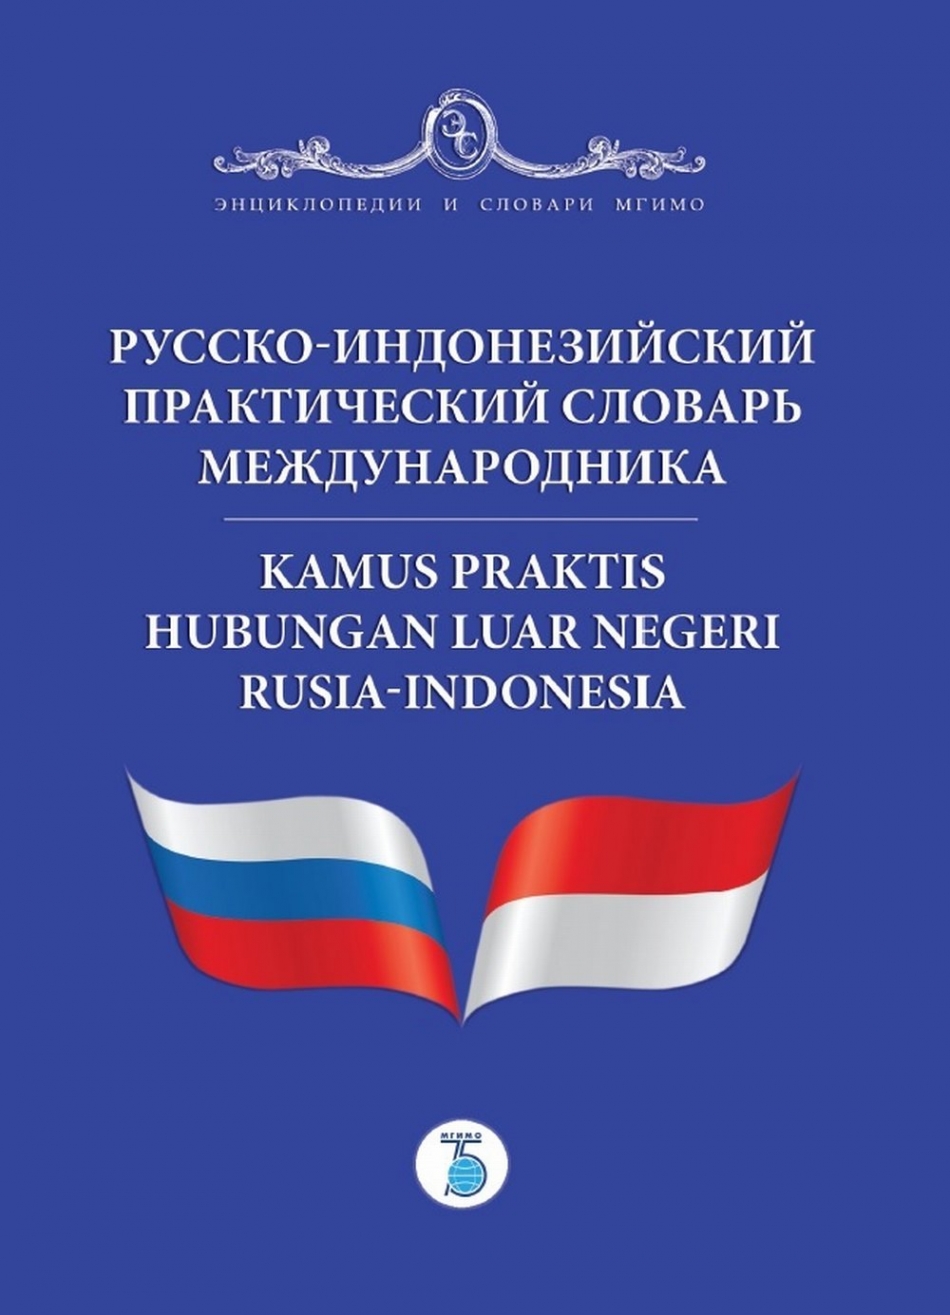 -    / Kamus praktis hubungan luar negeri Rusia-Indonesia 